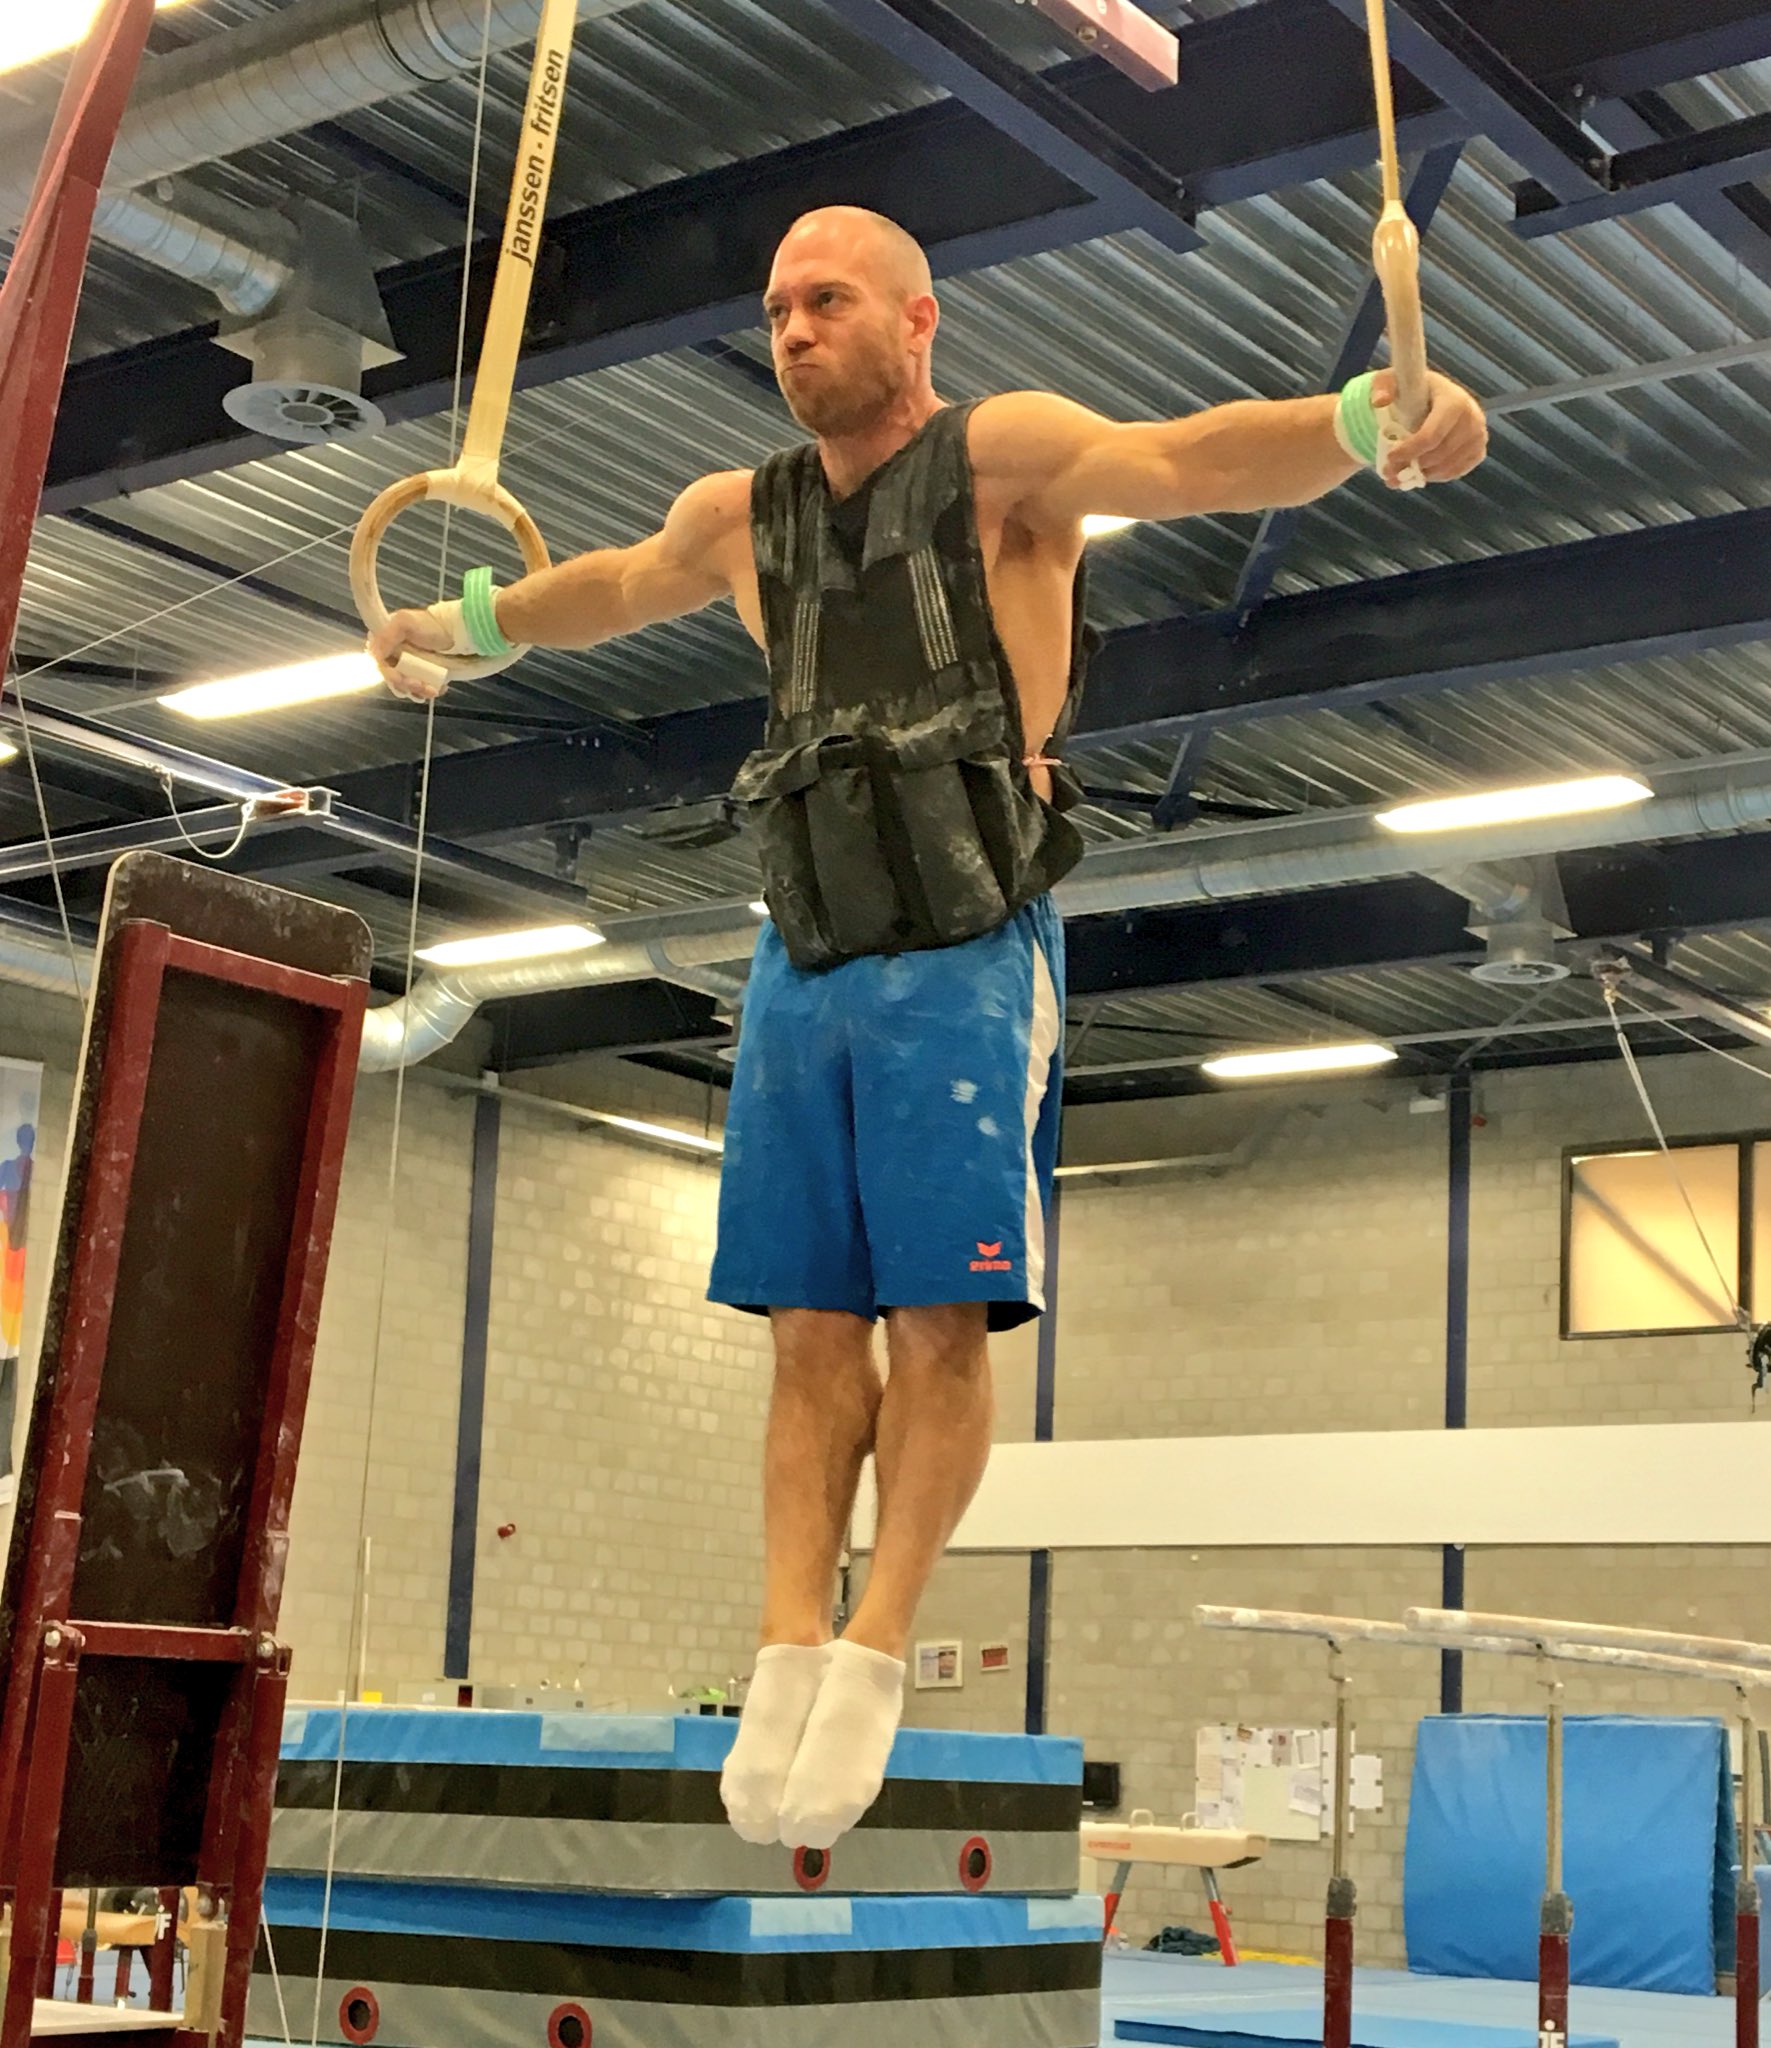 VICTORIAN CROSS WORK - STILL RINGS TRAINING (at All American Gymnastics) -  YouTube